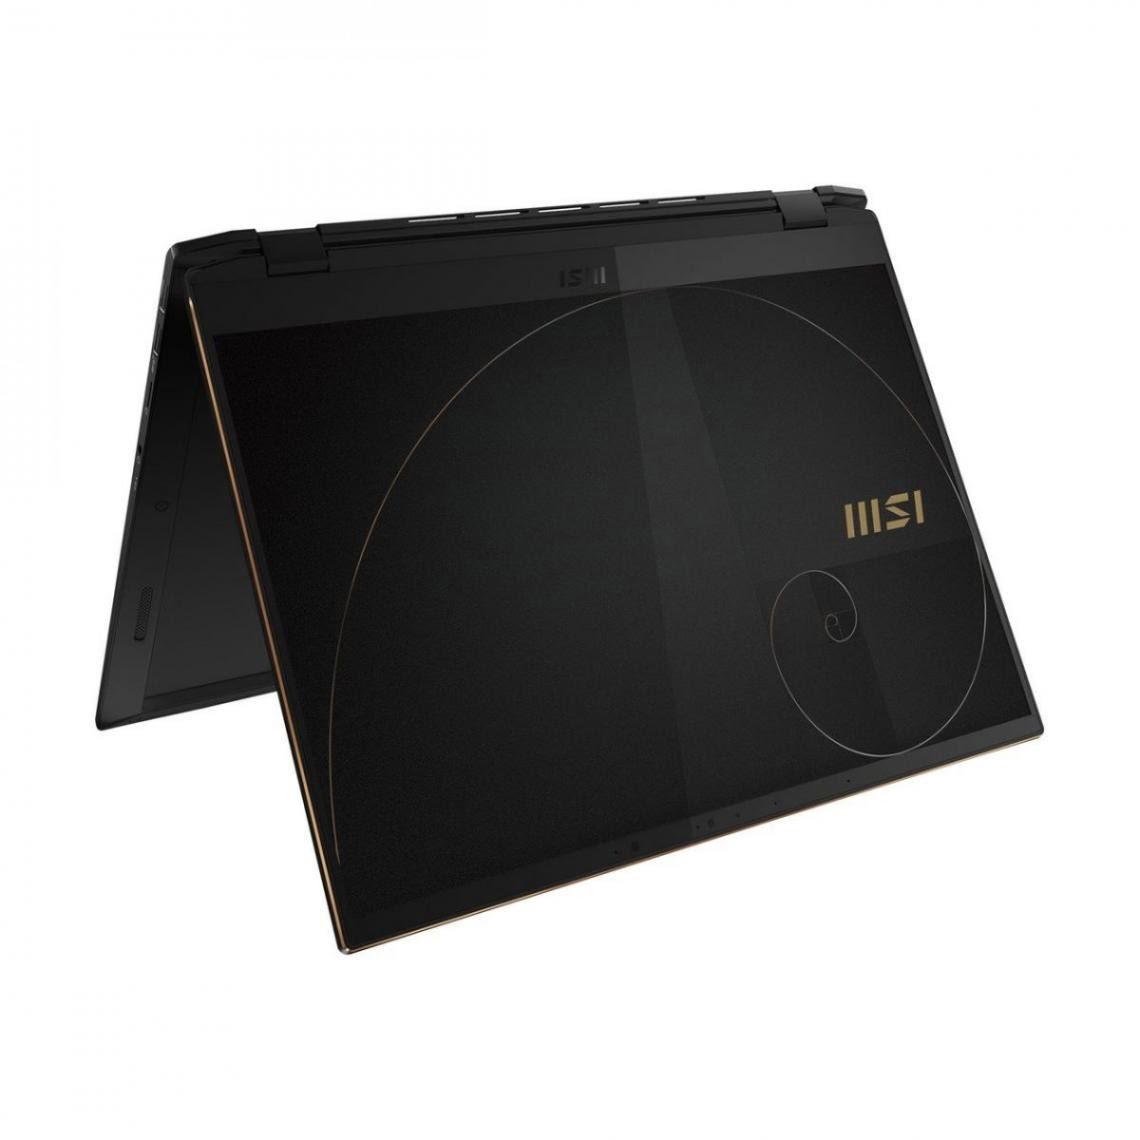 MSI 9S7-159231-036 - PC portable MSI - Cybertek.fr - 1